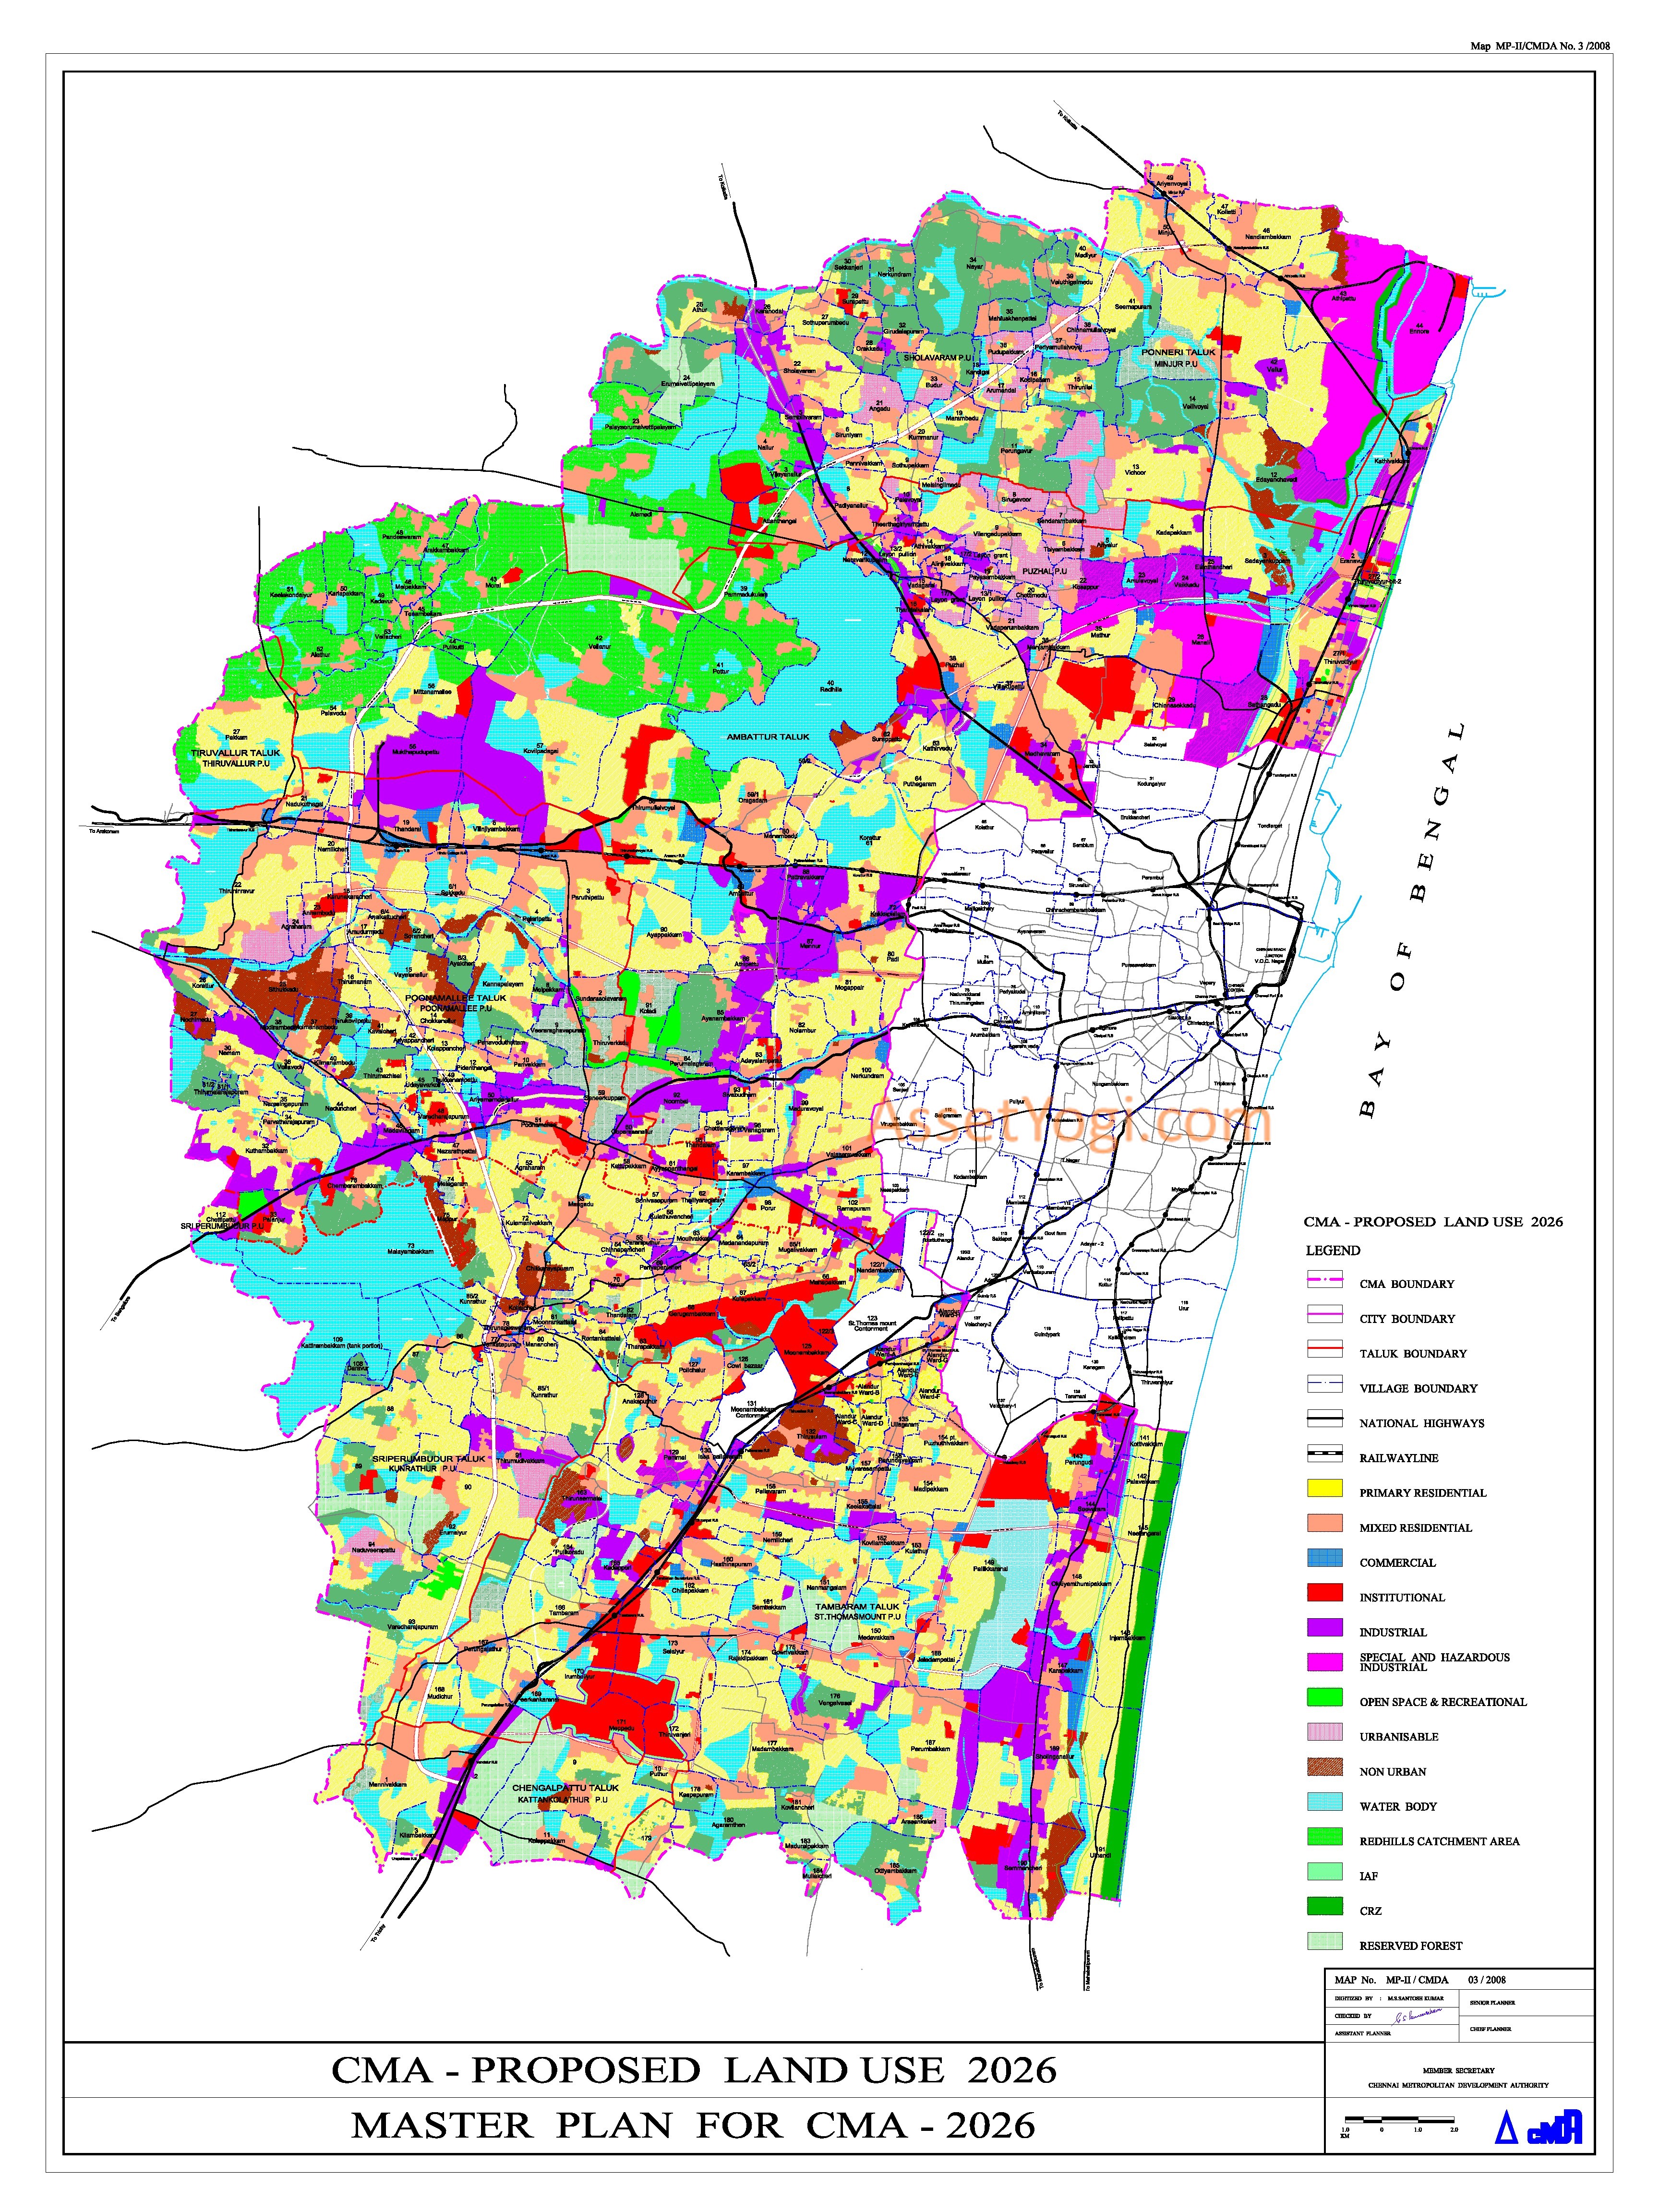 chennai city map pdf Chennai Master Plan 2026 Map Summary Free Download chennai city map pdf